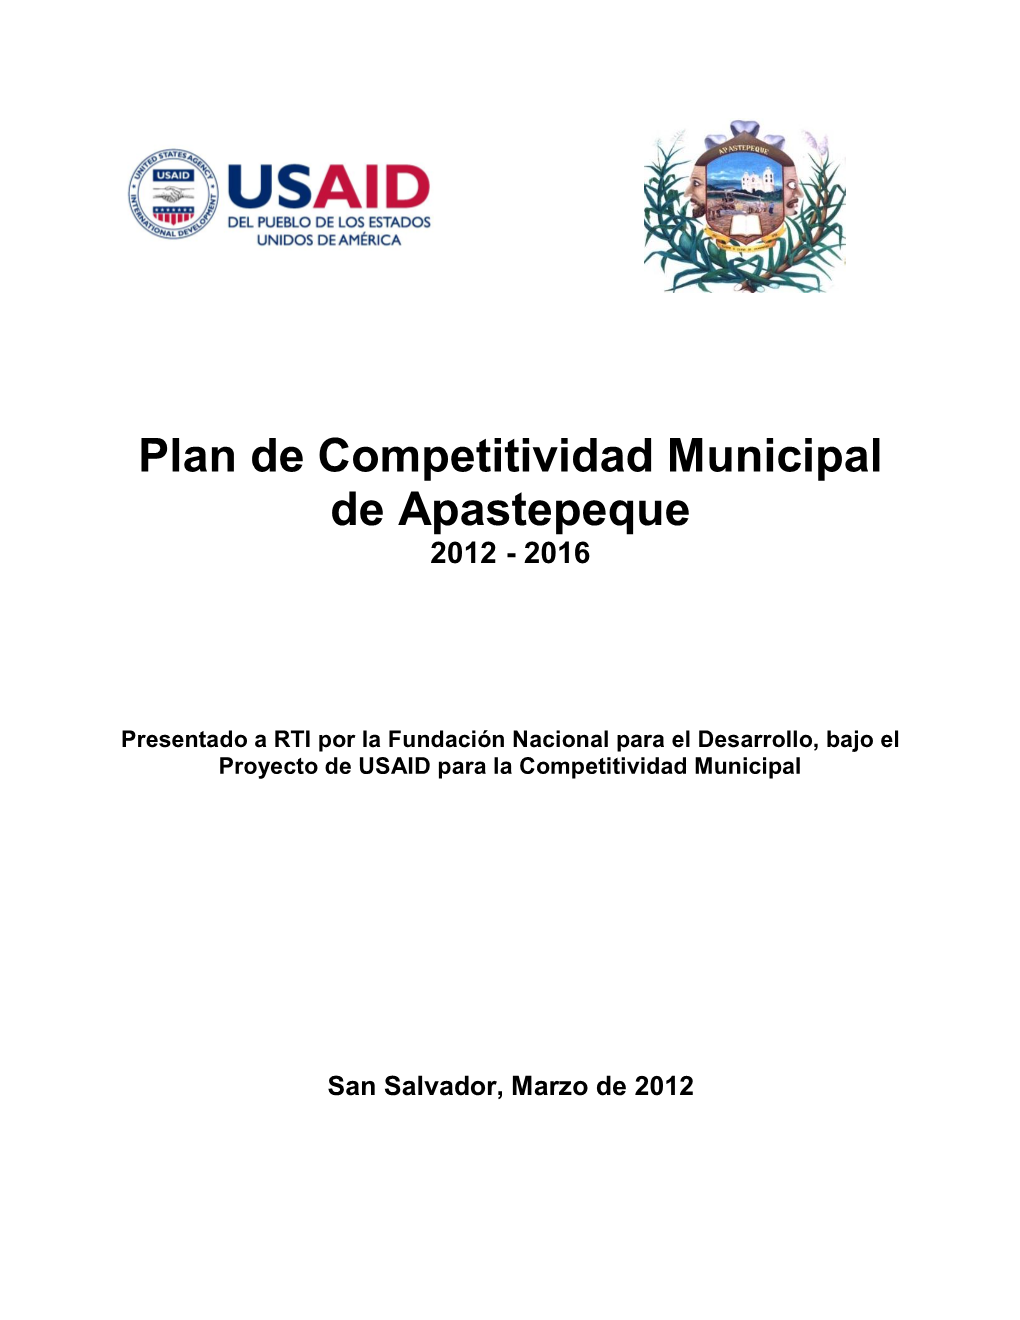 Plan De Competitividad Municipal De Apastepeque 2012 - 2016